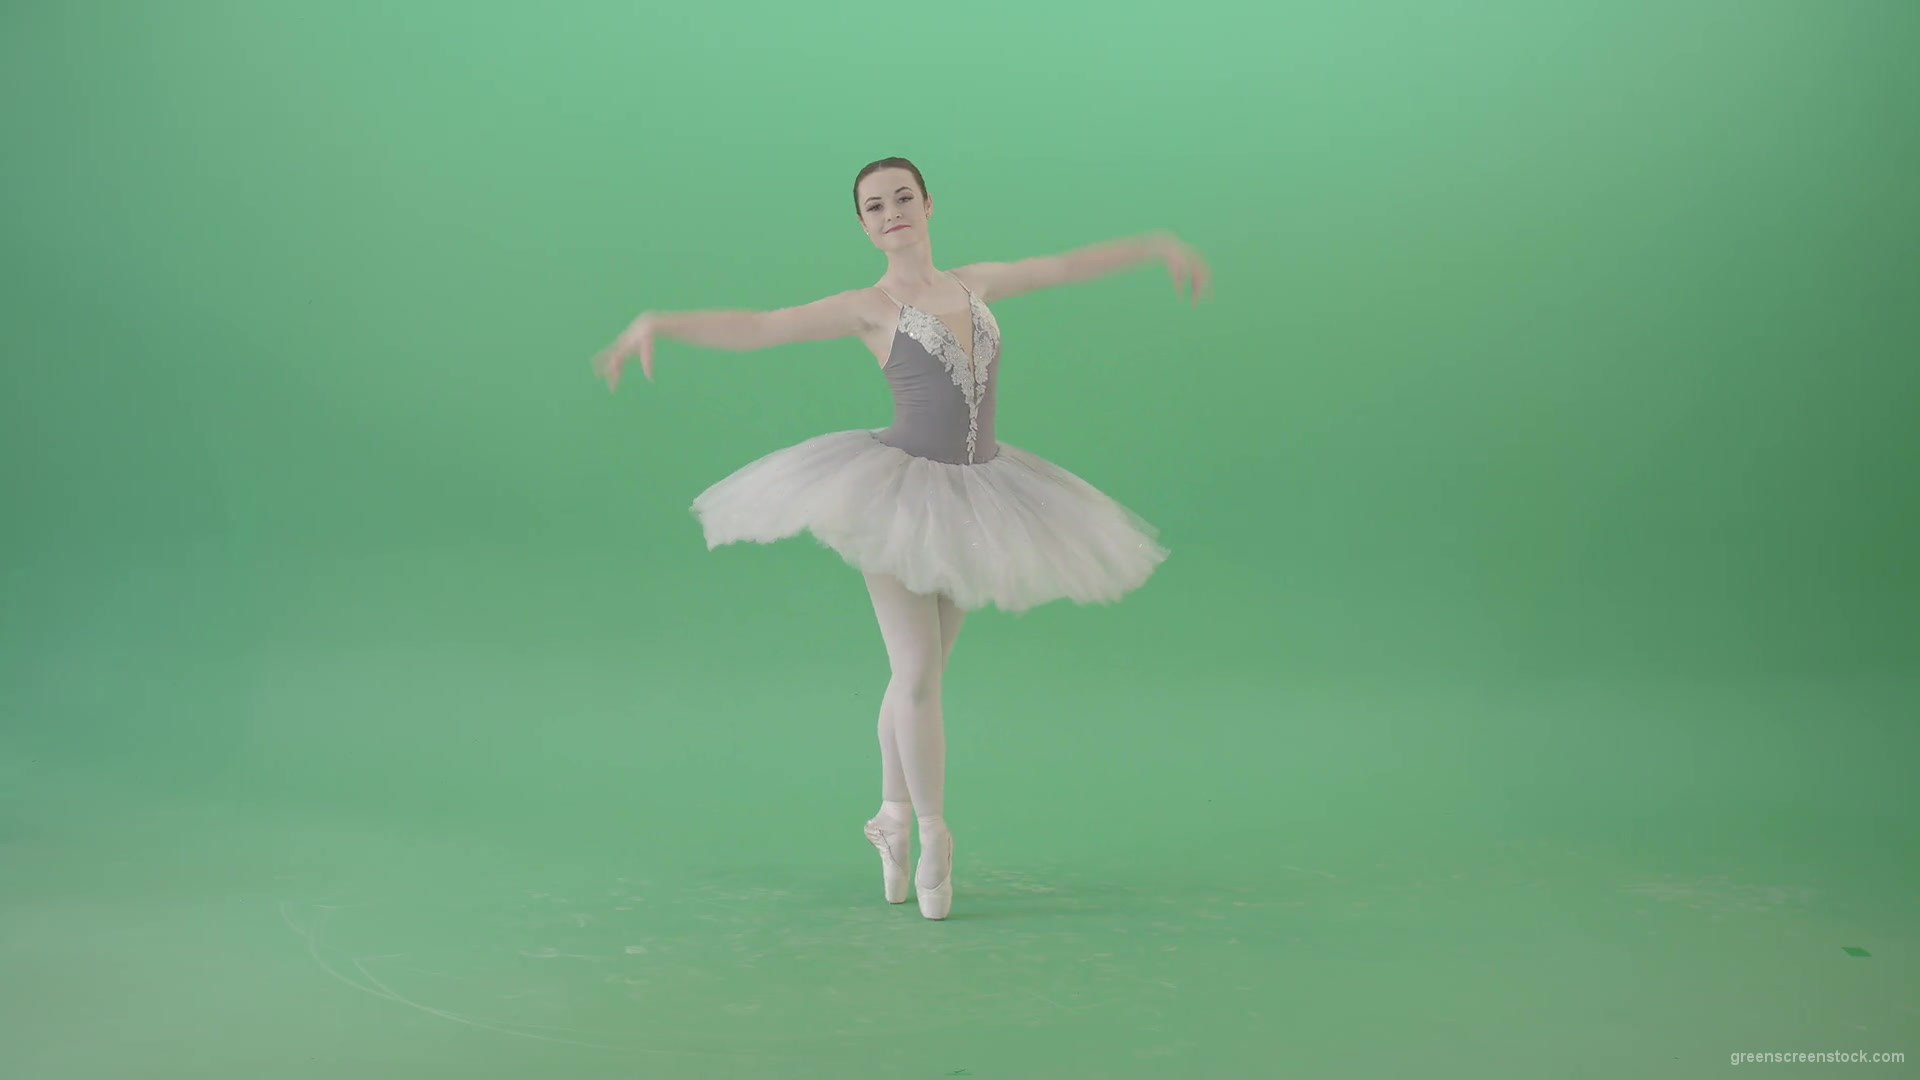 Ballerina-waving-hands-and-dance-on-green-screen-4K-Video-Footage-1920_002 Green Screen Stock